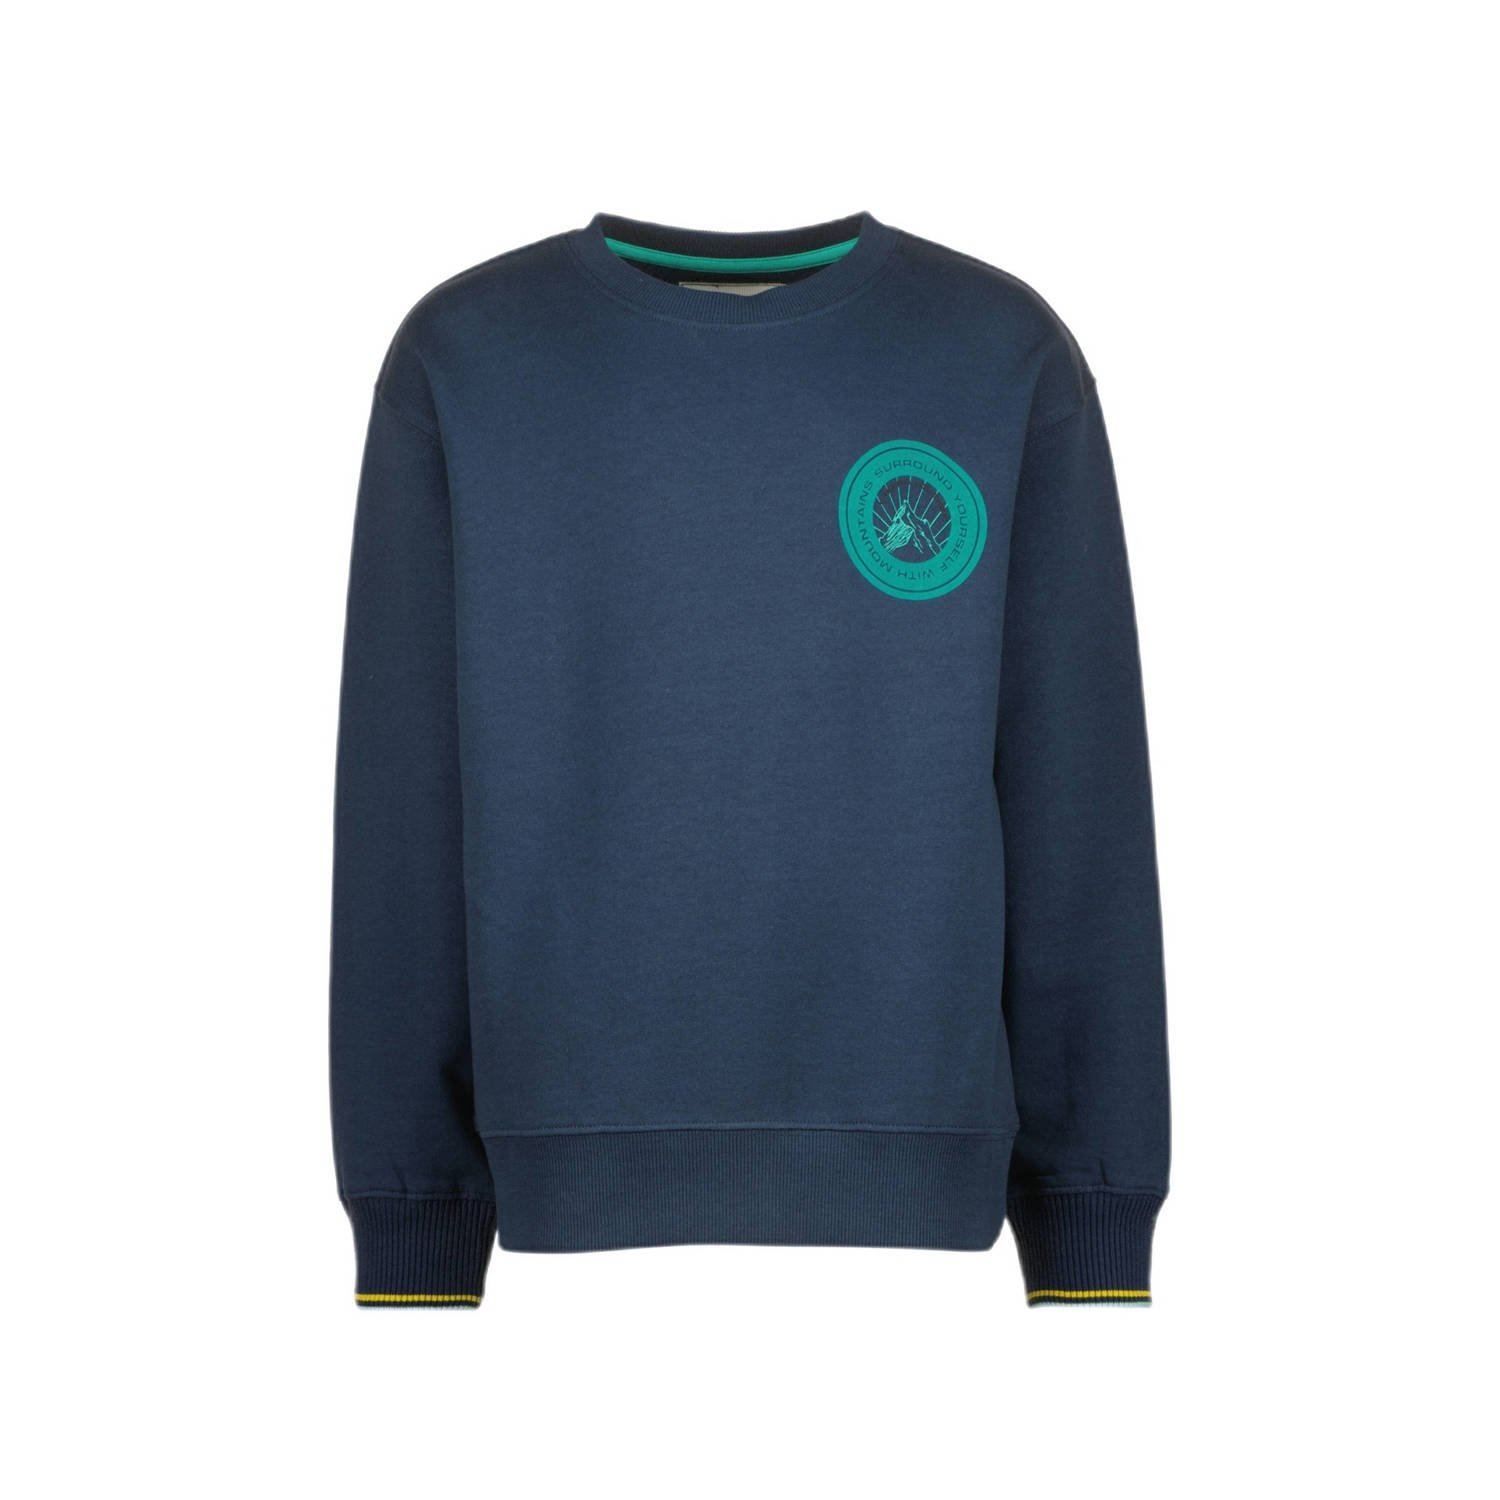 VINGINO sweater Nave met logo donkerblauw groen Logo 104